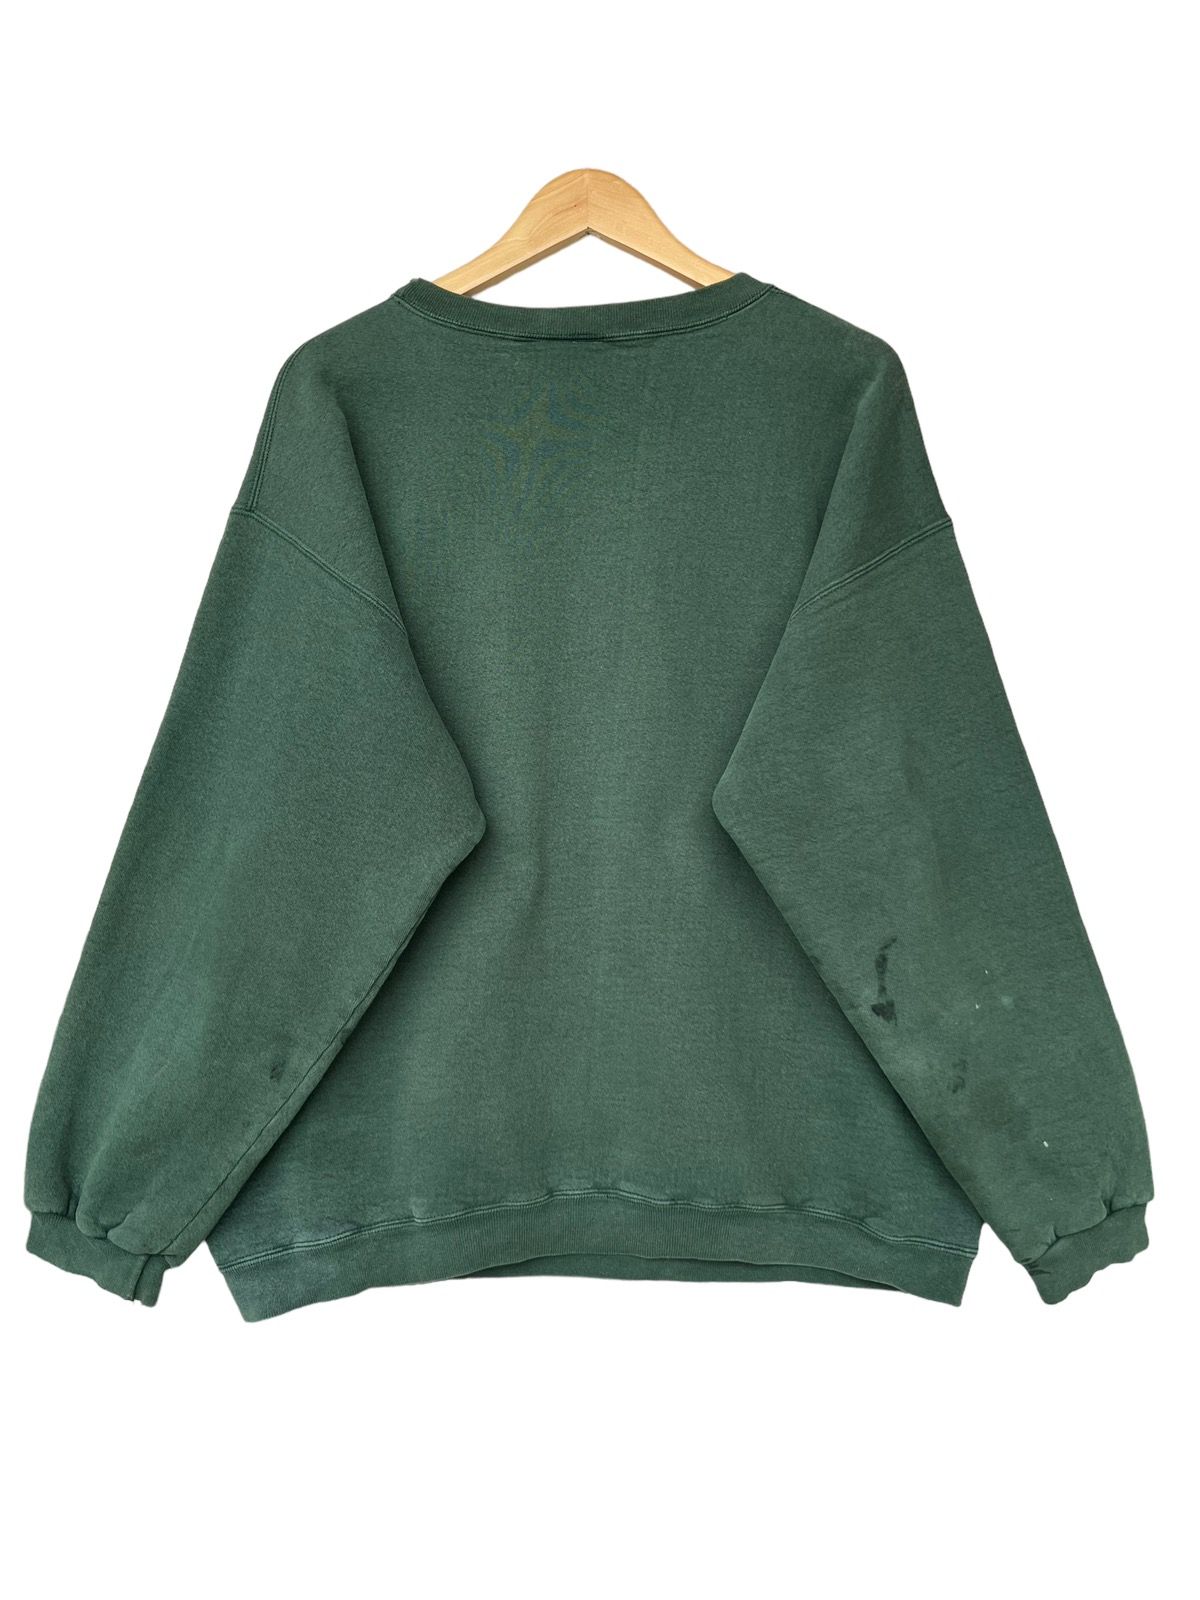 Vintage 90s Adidas Trefoil Biglogo Green Baggy Sweatshirt - 9